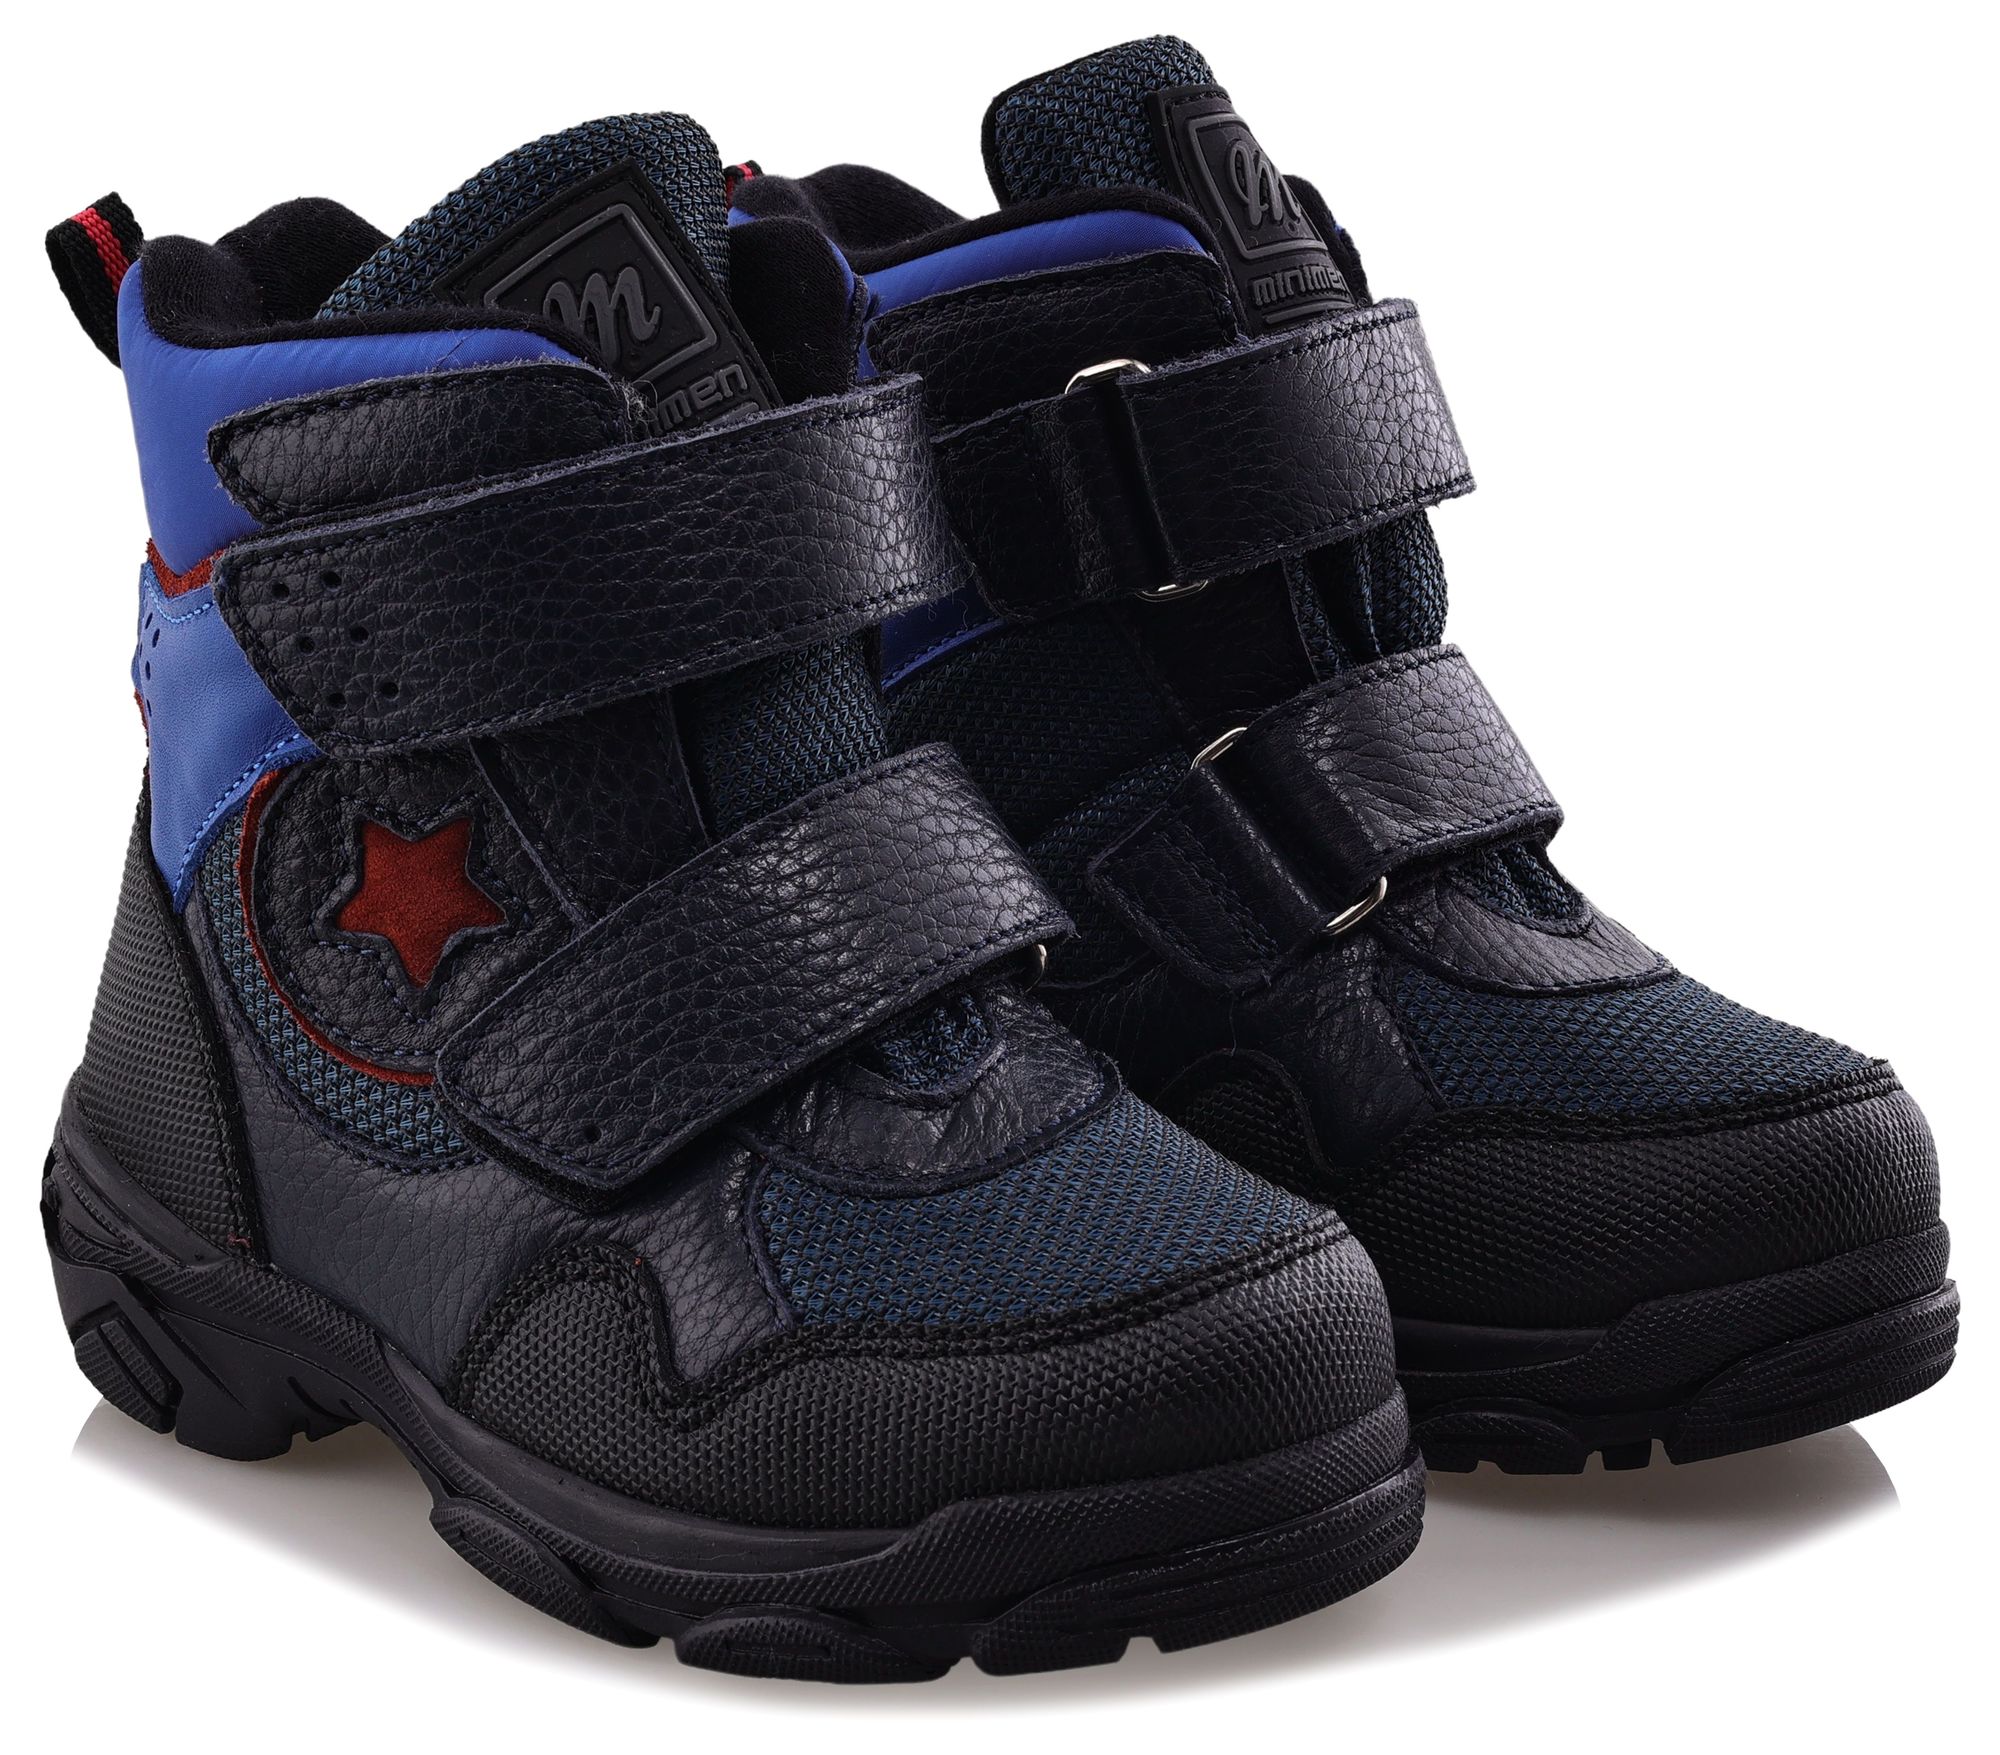 Ботинки Minimen для мальчиков, тёмно-синие, размер 24, 2658-52-23B-01 ботинки minimen для девочек сиреневые размер 27 2658 63 23b 04